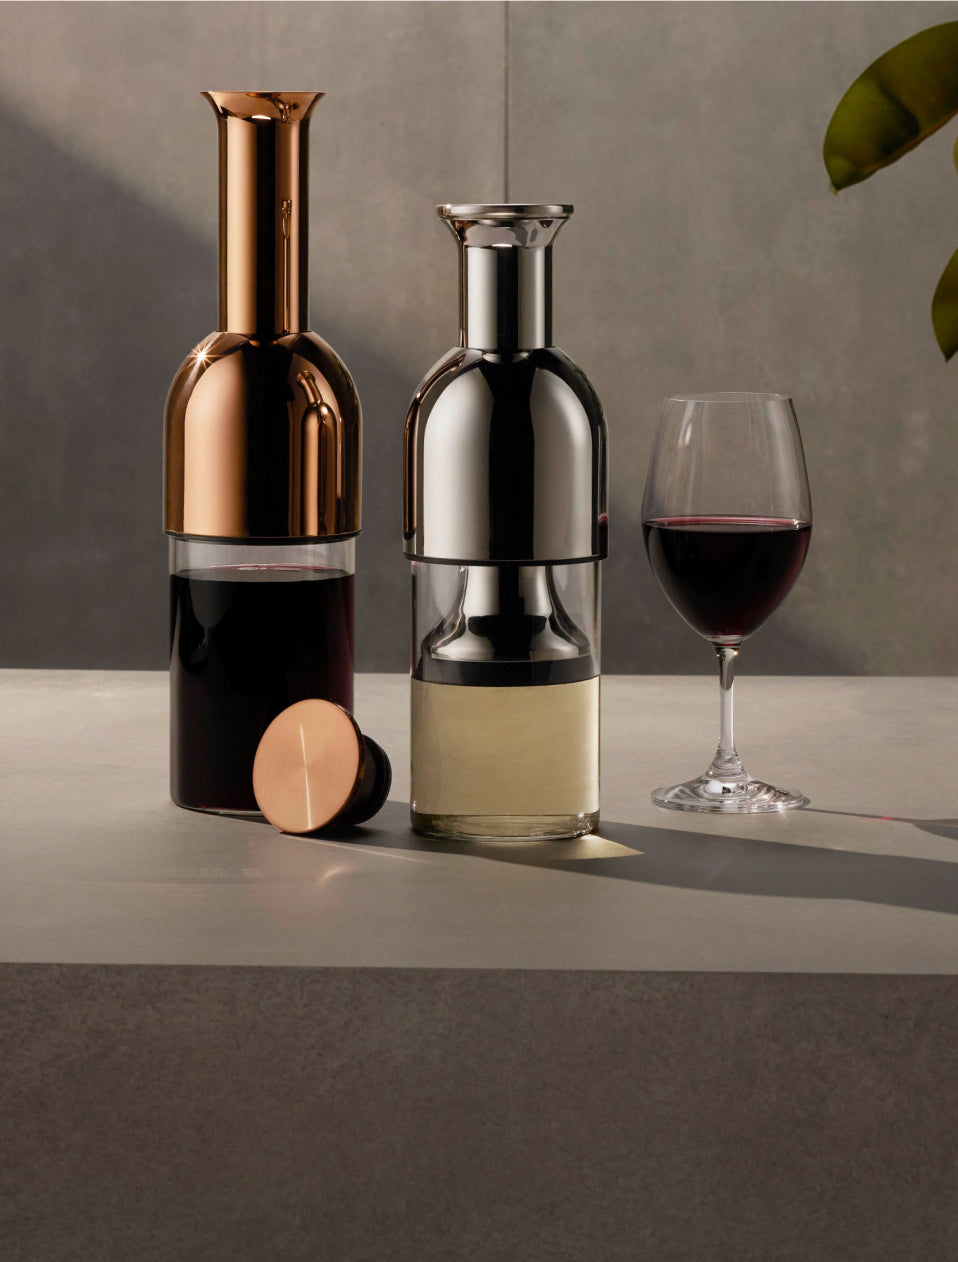 A copper mirror eto wine decanter with red wine in it beside a stainess mirror wine decanter with white wine in it, beside a glass of red wine